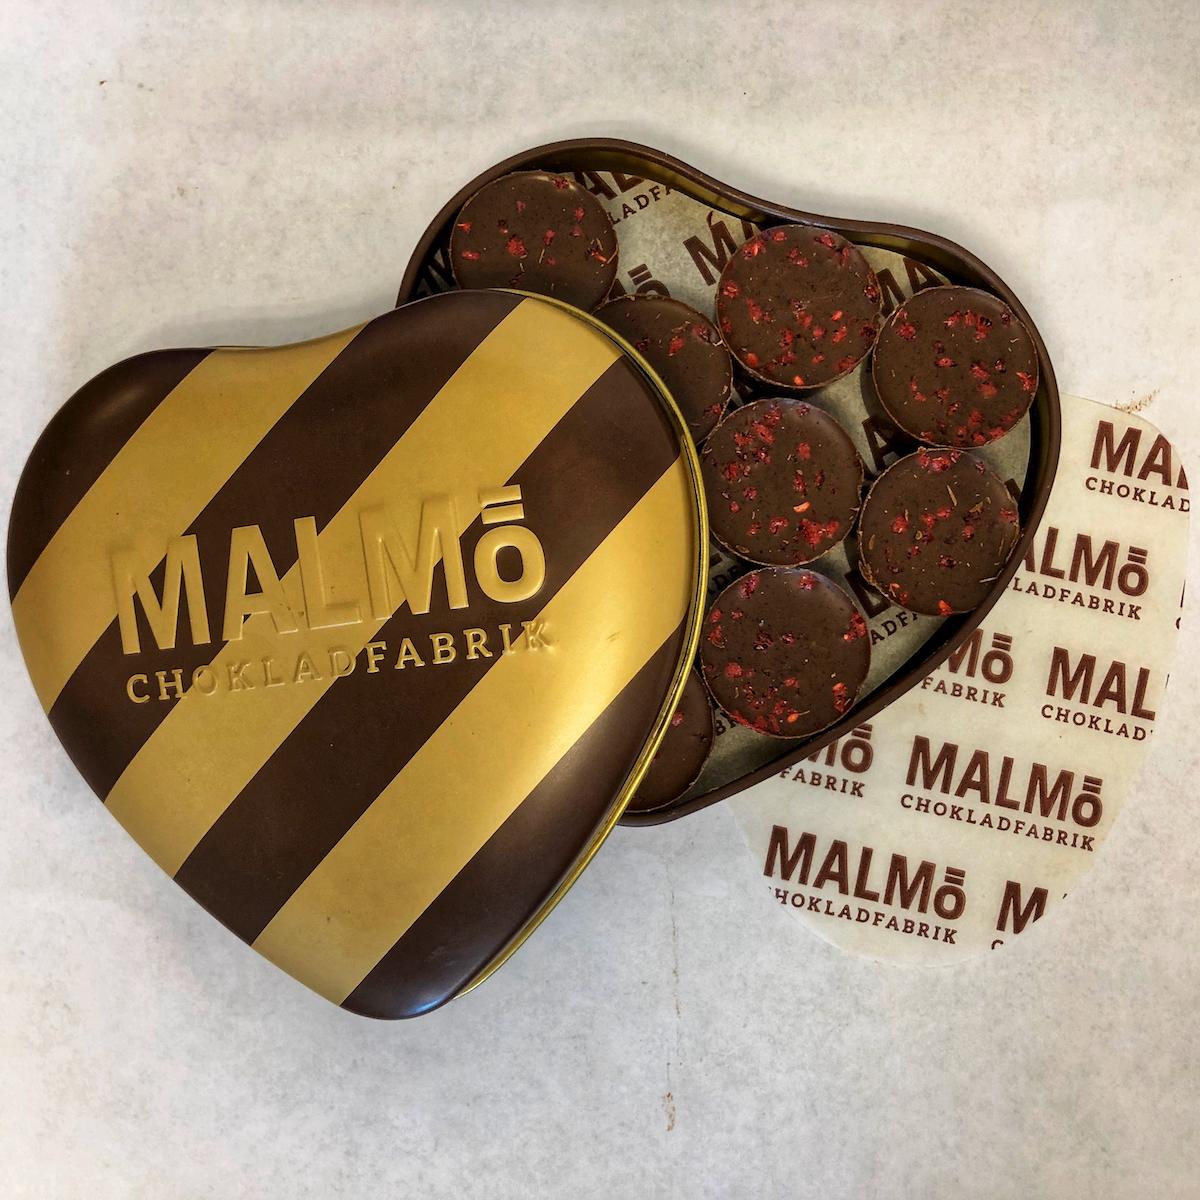 Organic chocolate from Malmö chokladfabrik